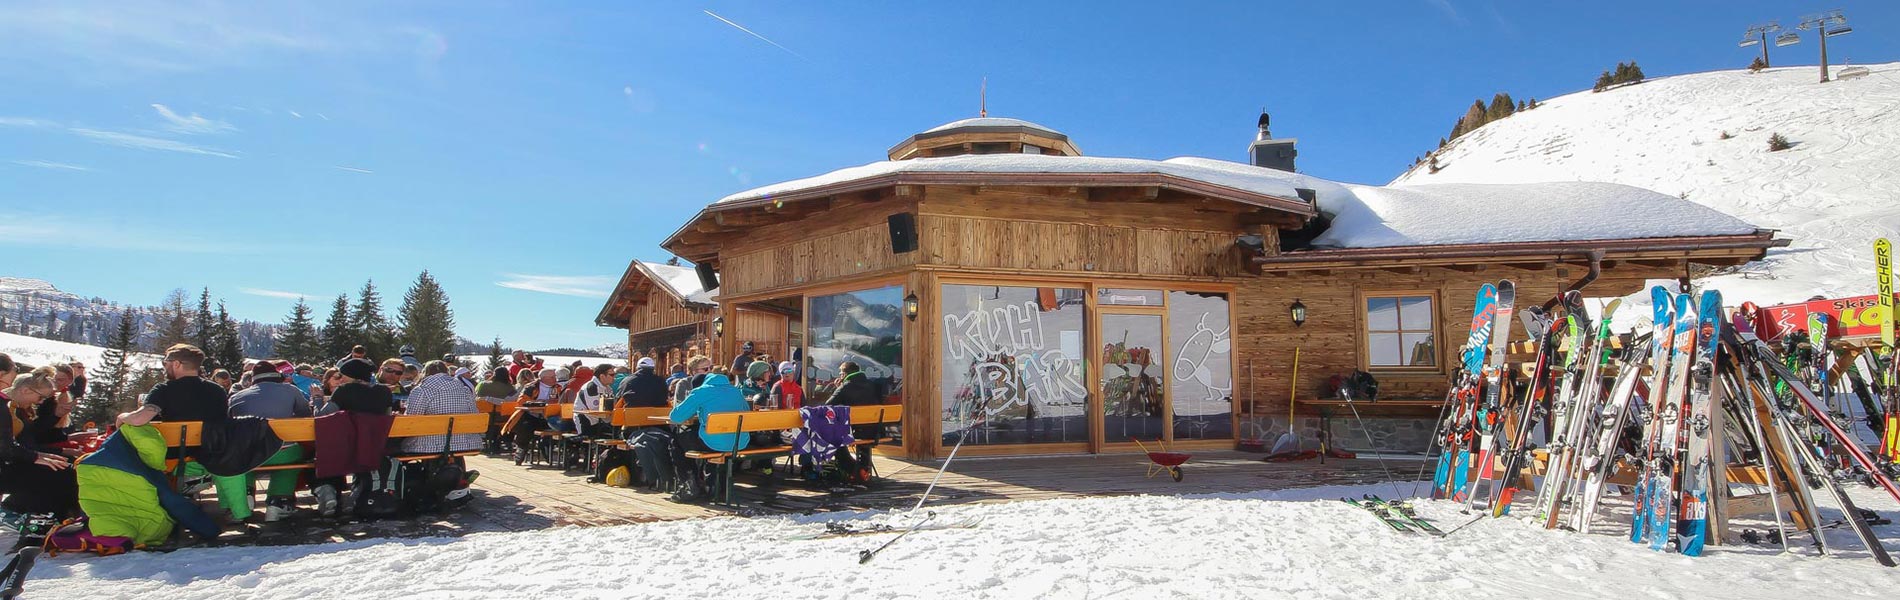 Apres Ski Bar Lofer 6099